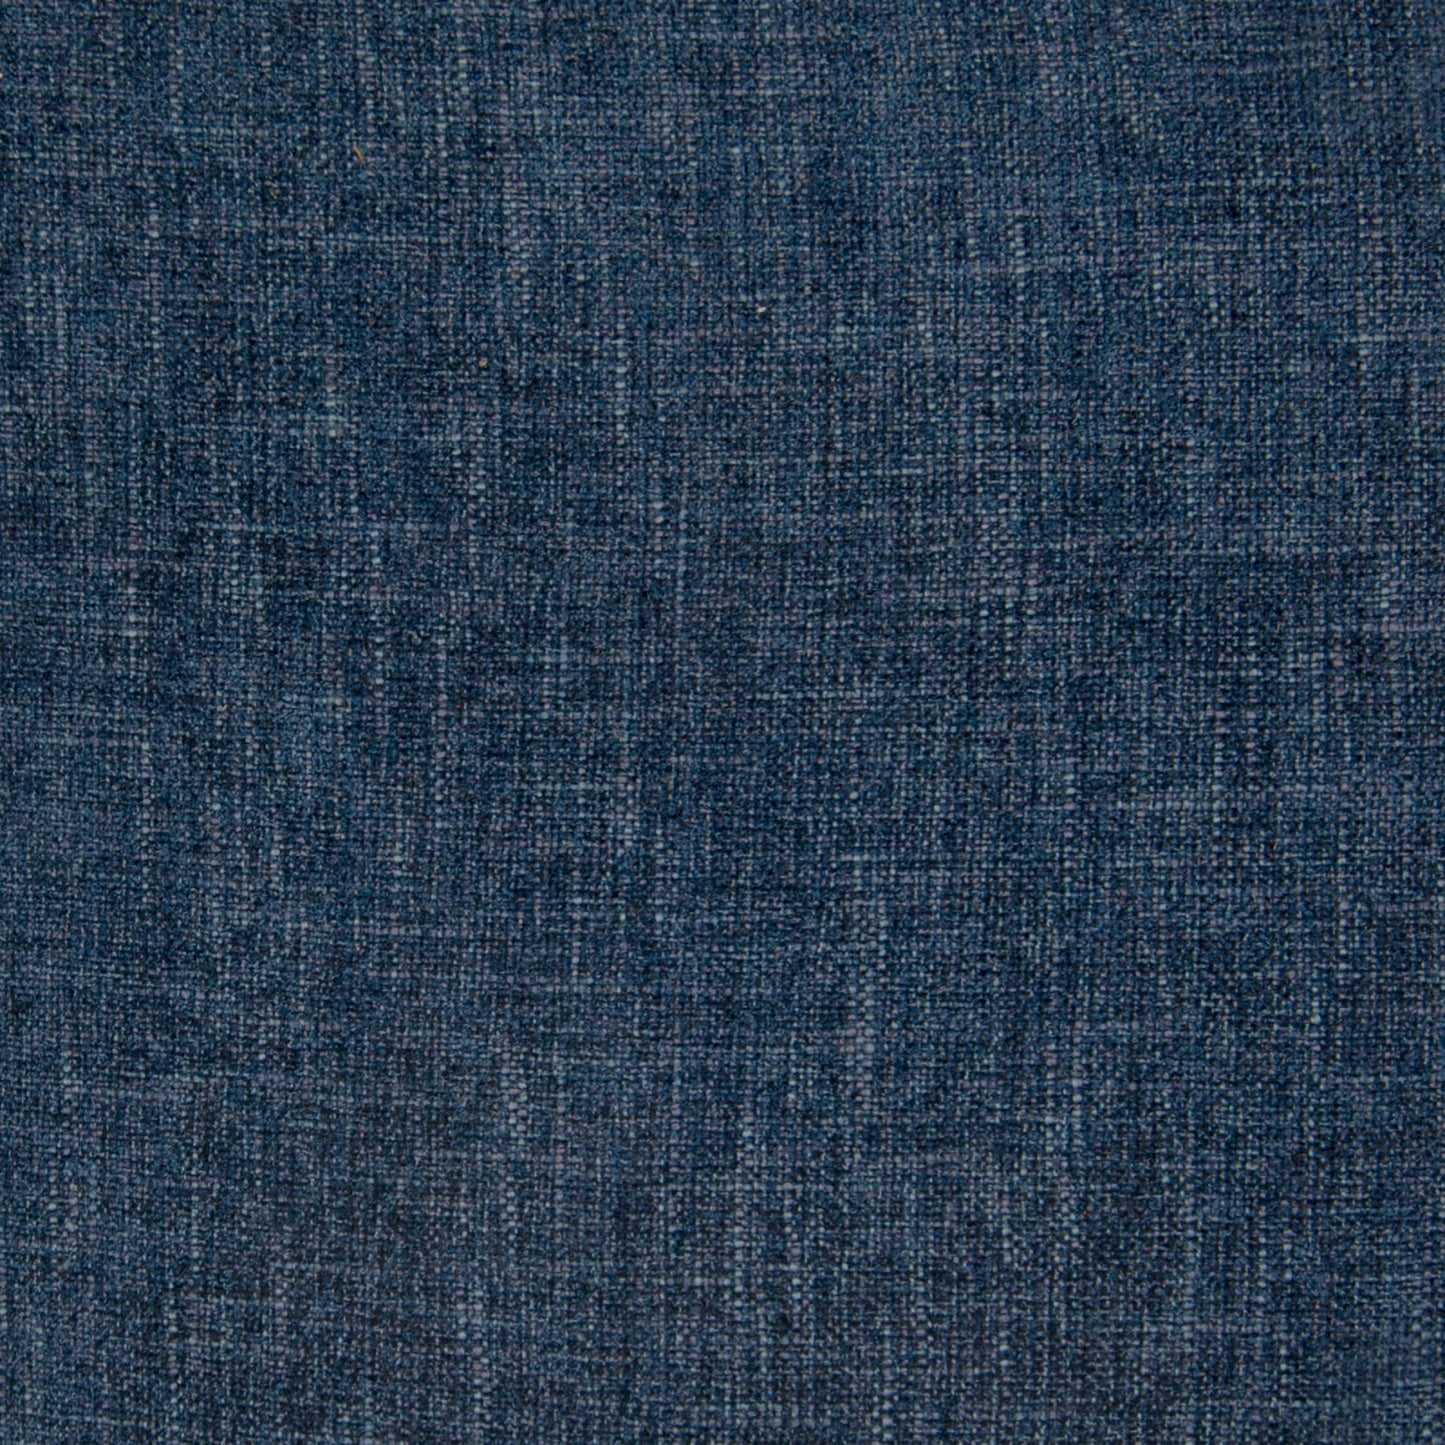 Purchase Greenhouse Fabric B3790 Navy